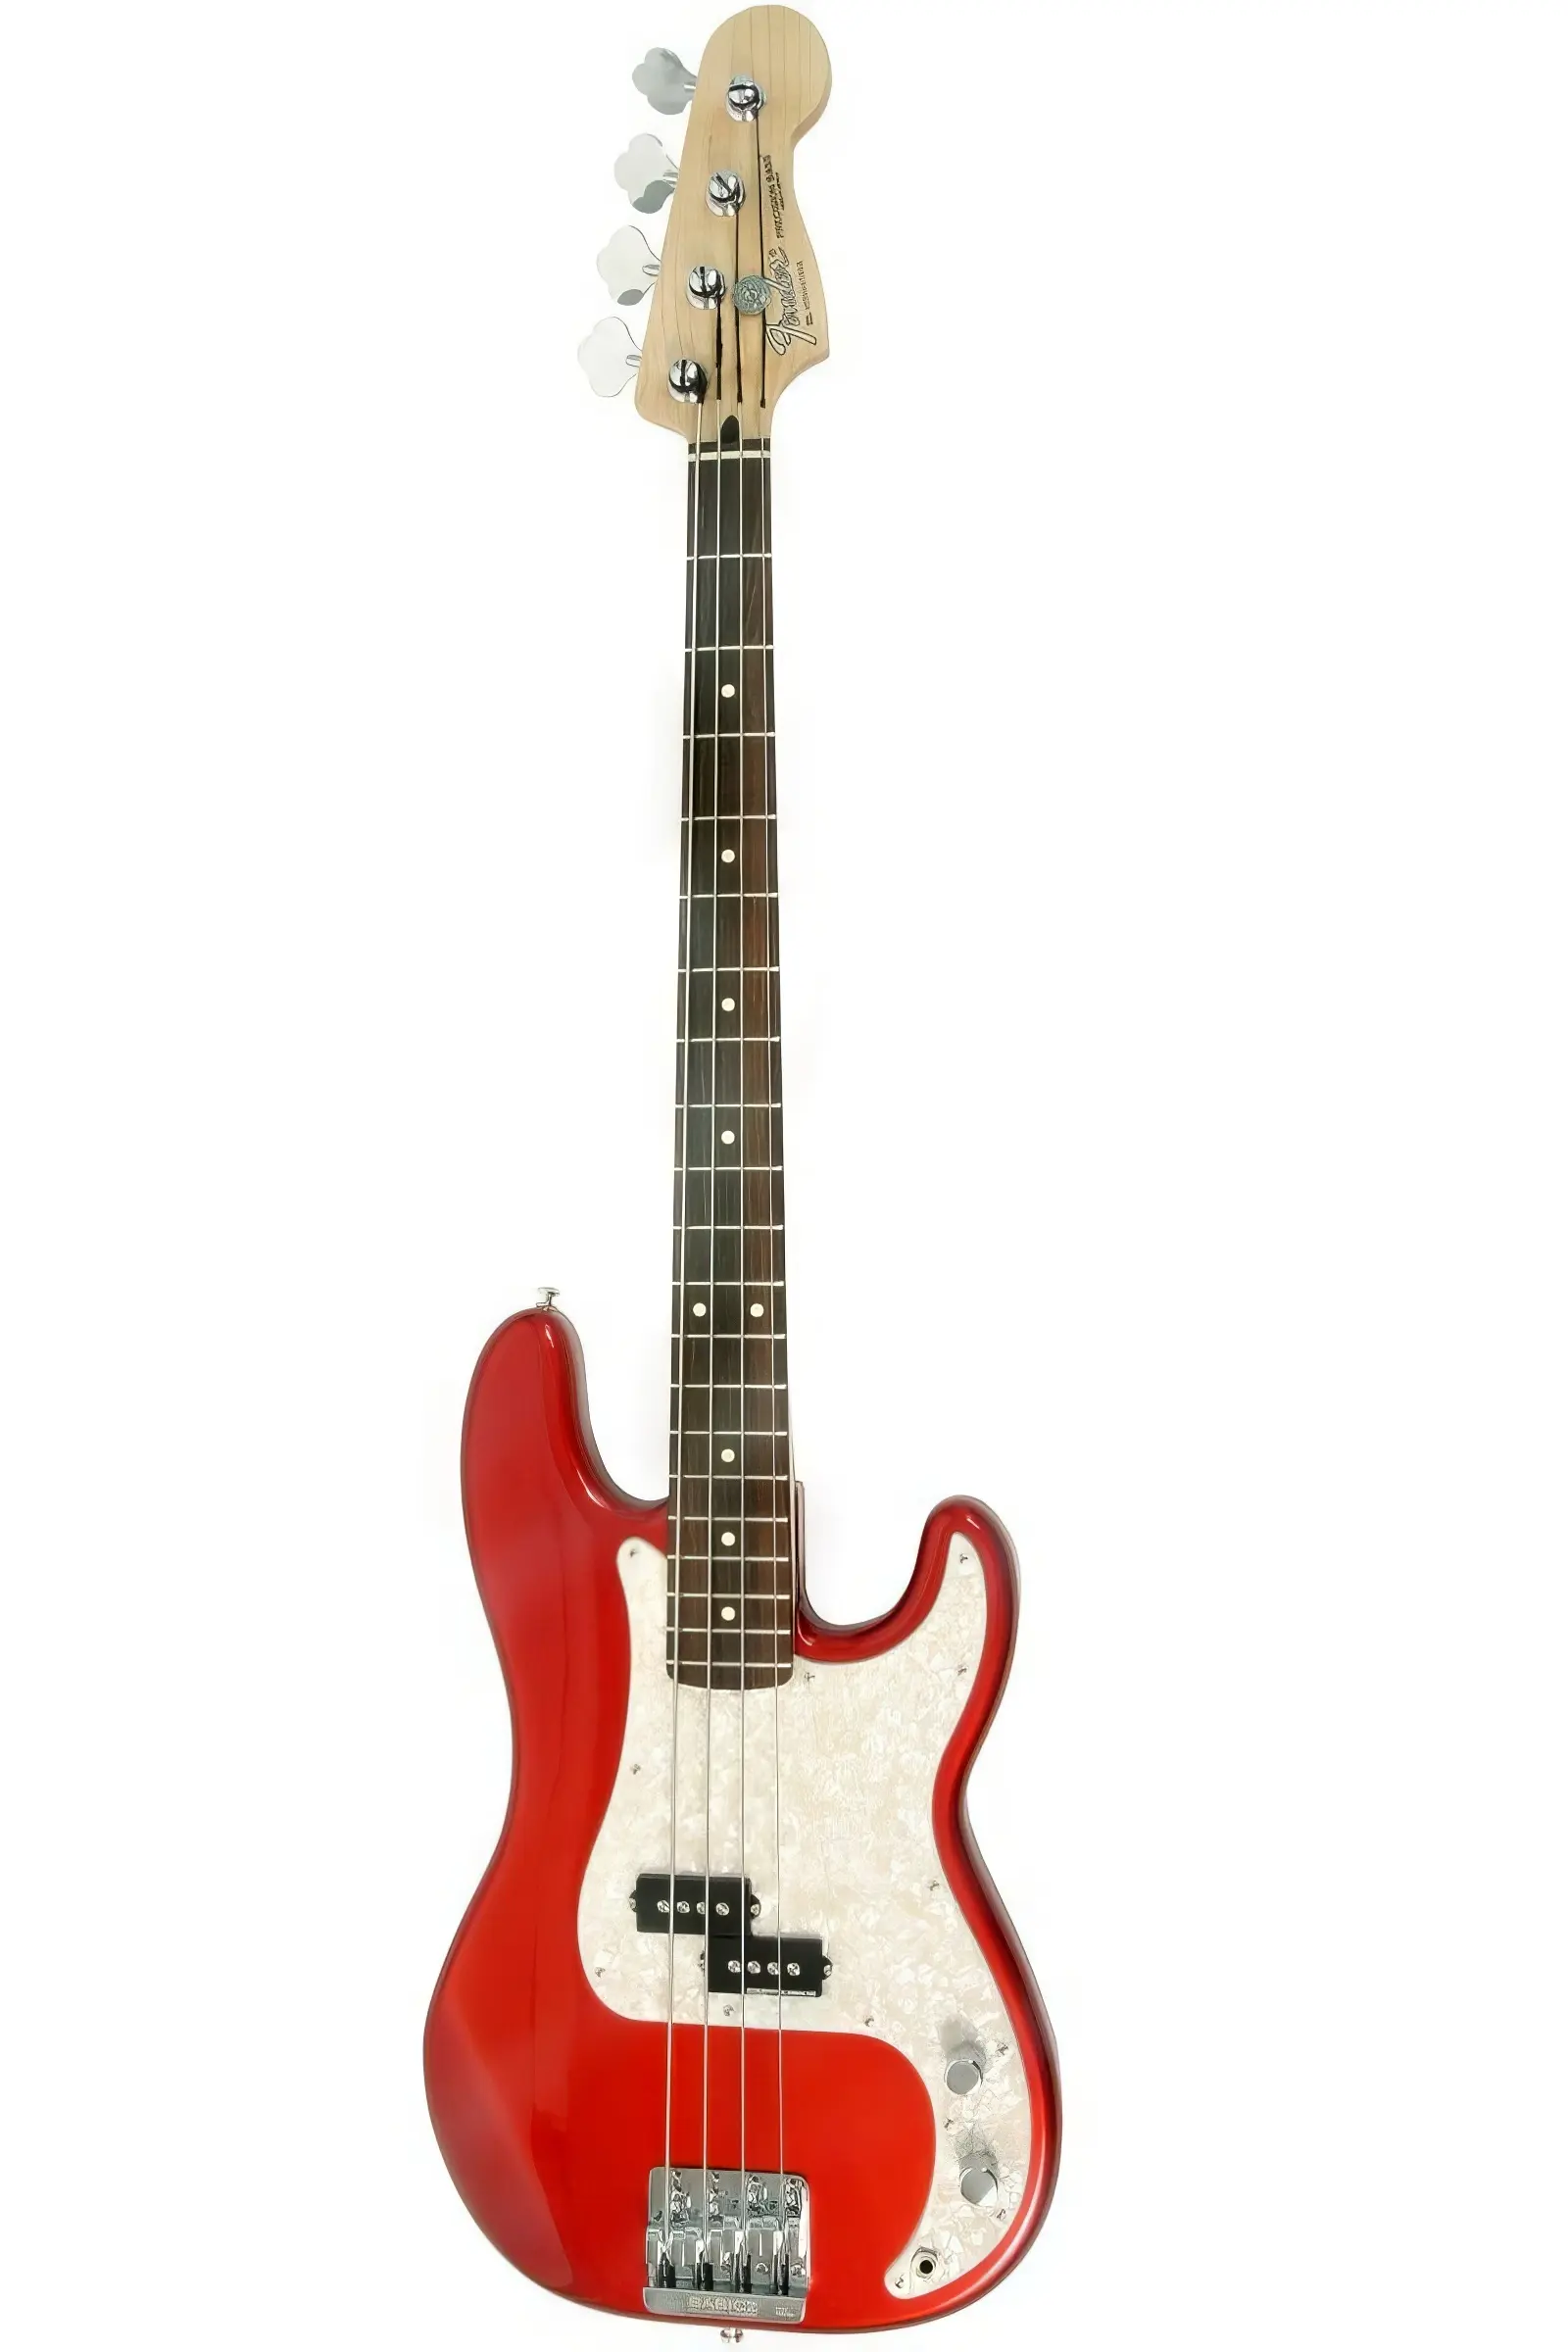 Fender Precision Bass 920D gitara fender precision bass 920d